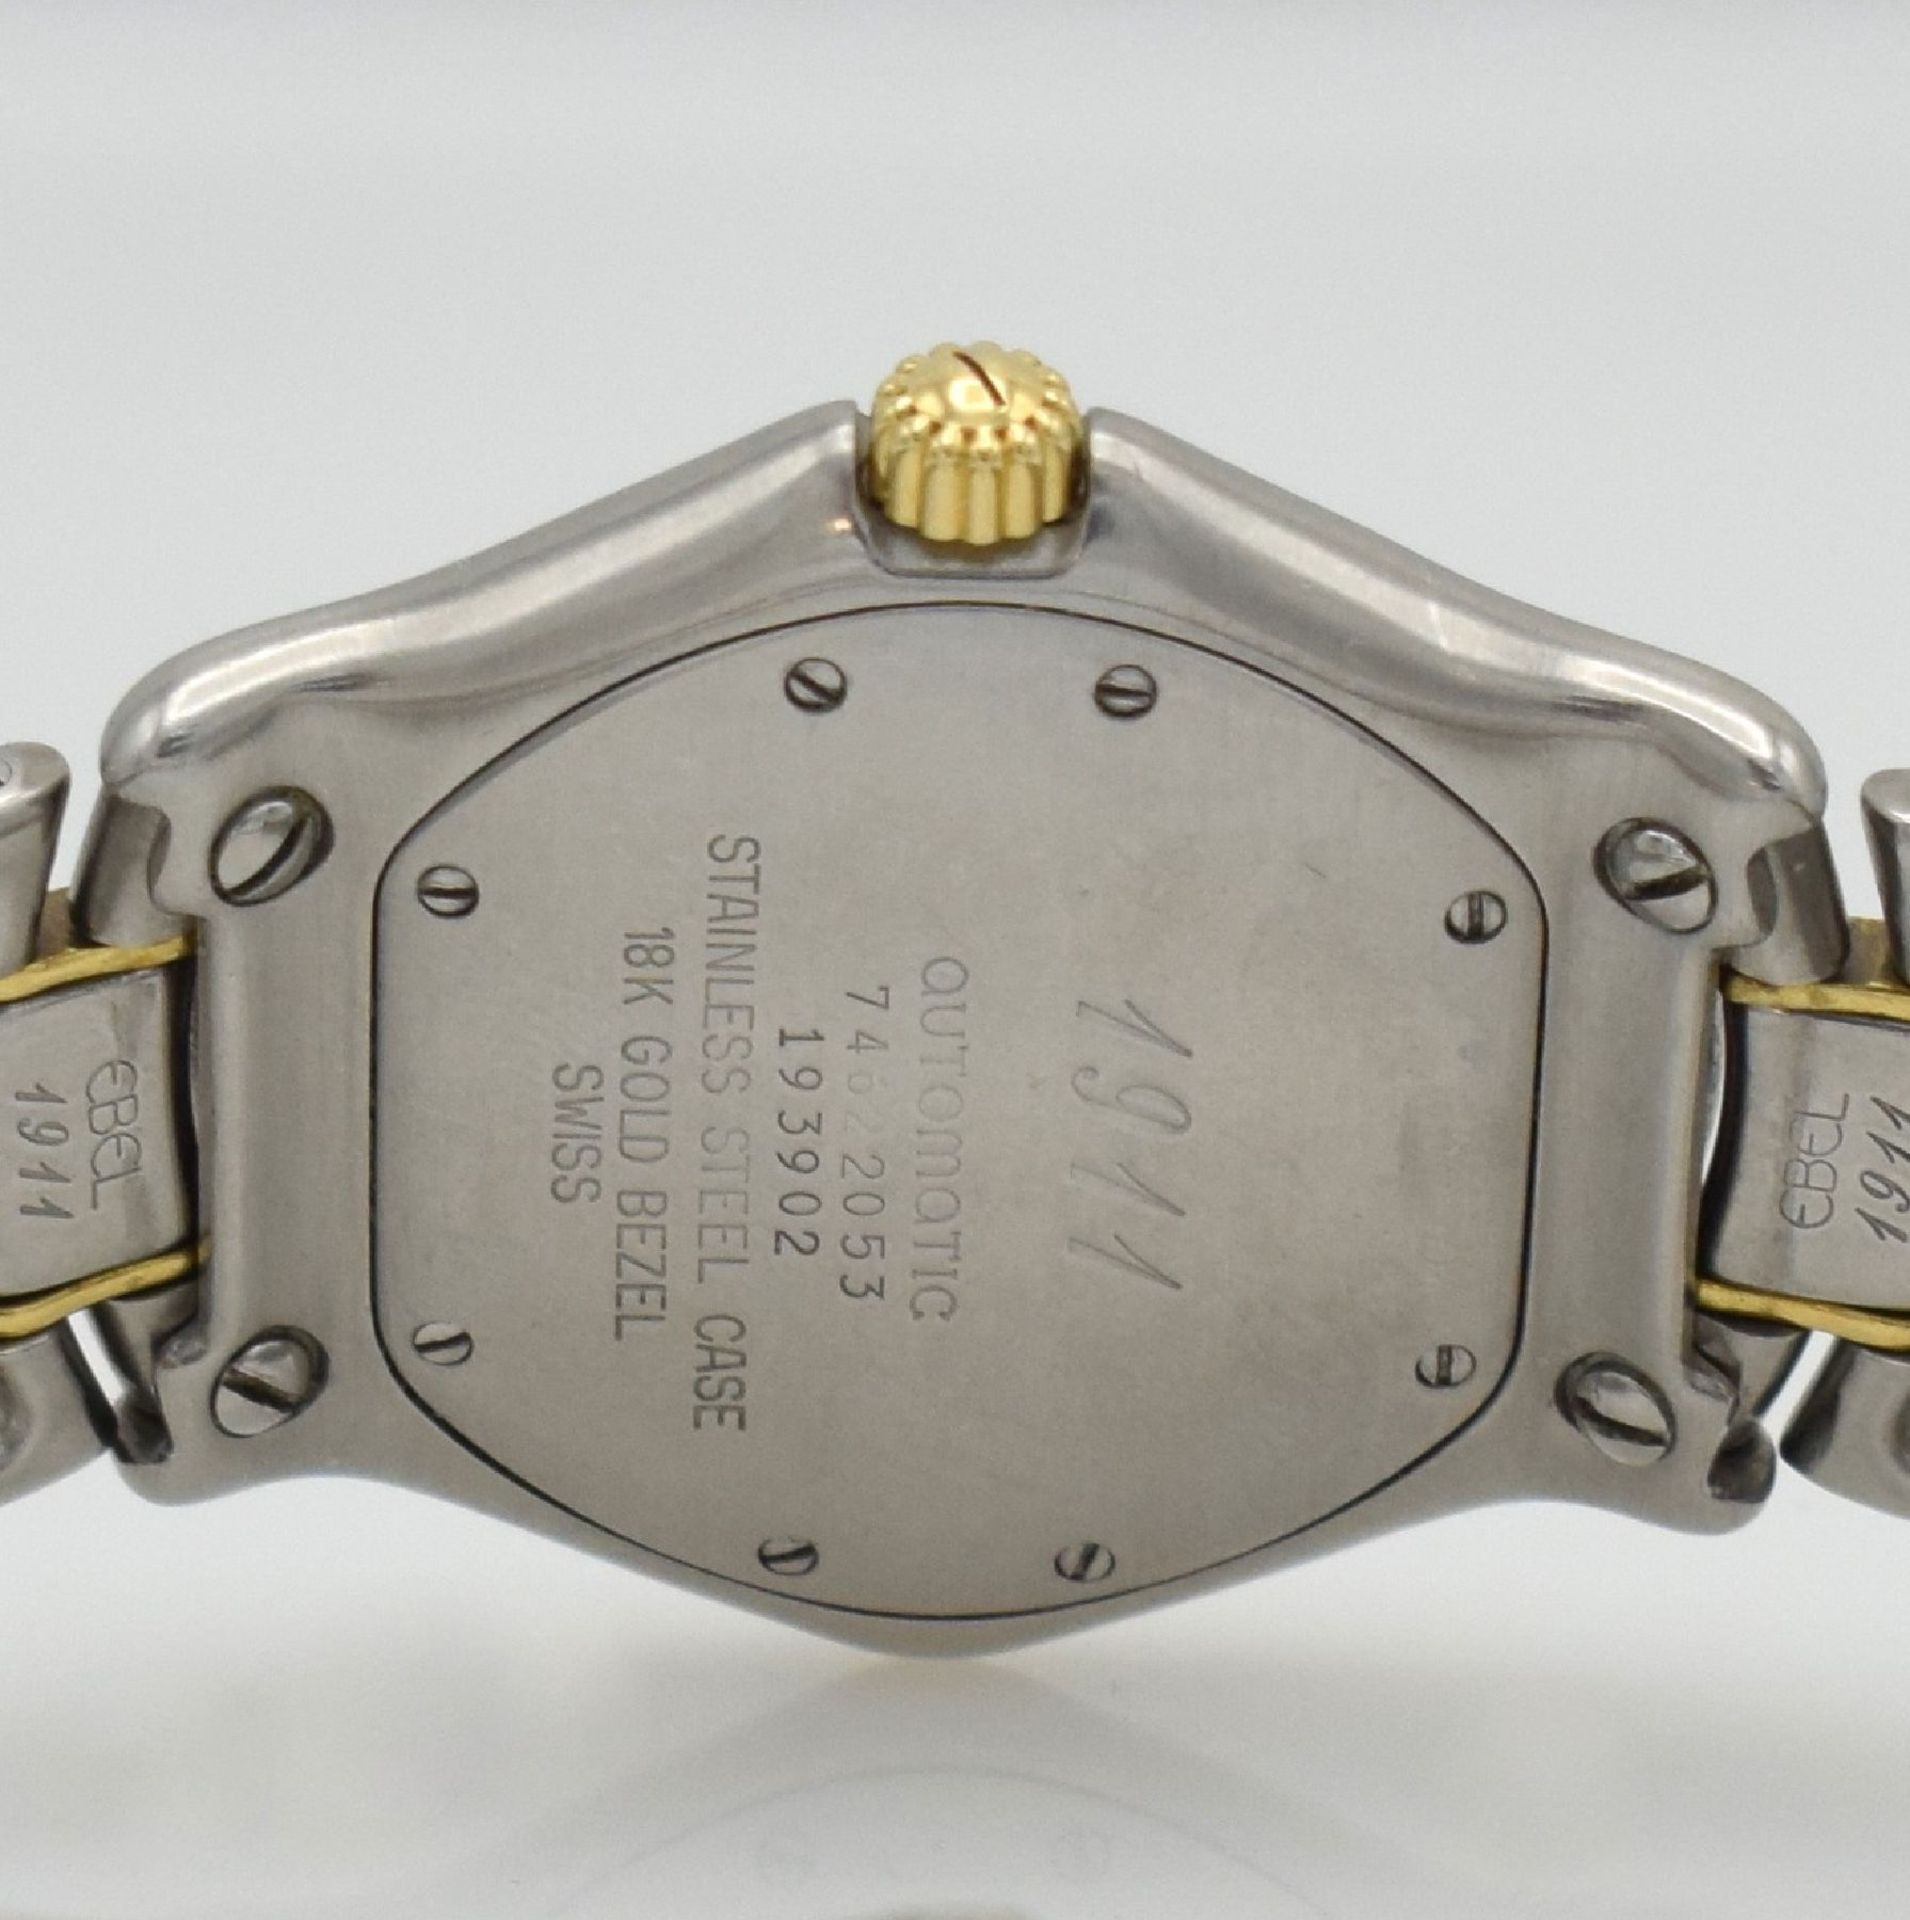 EBEL 1911 wristwatch in stainless steel/gold, Switzerland sold according to warranty card inMay - Bild 7 aus 10